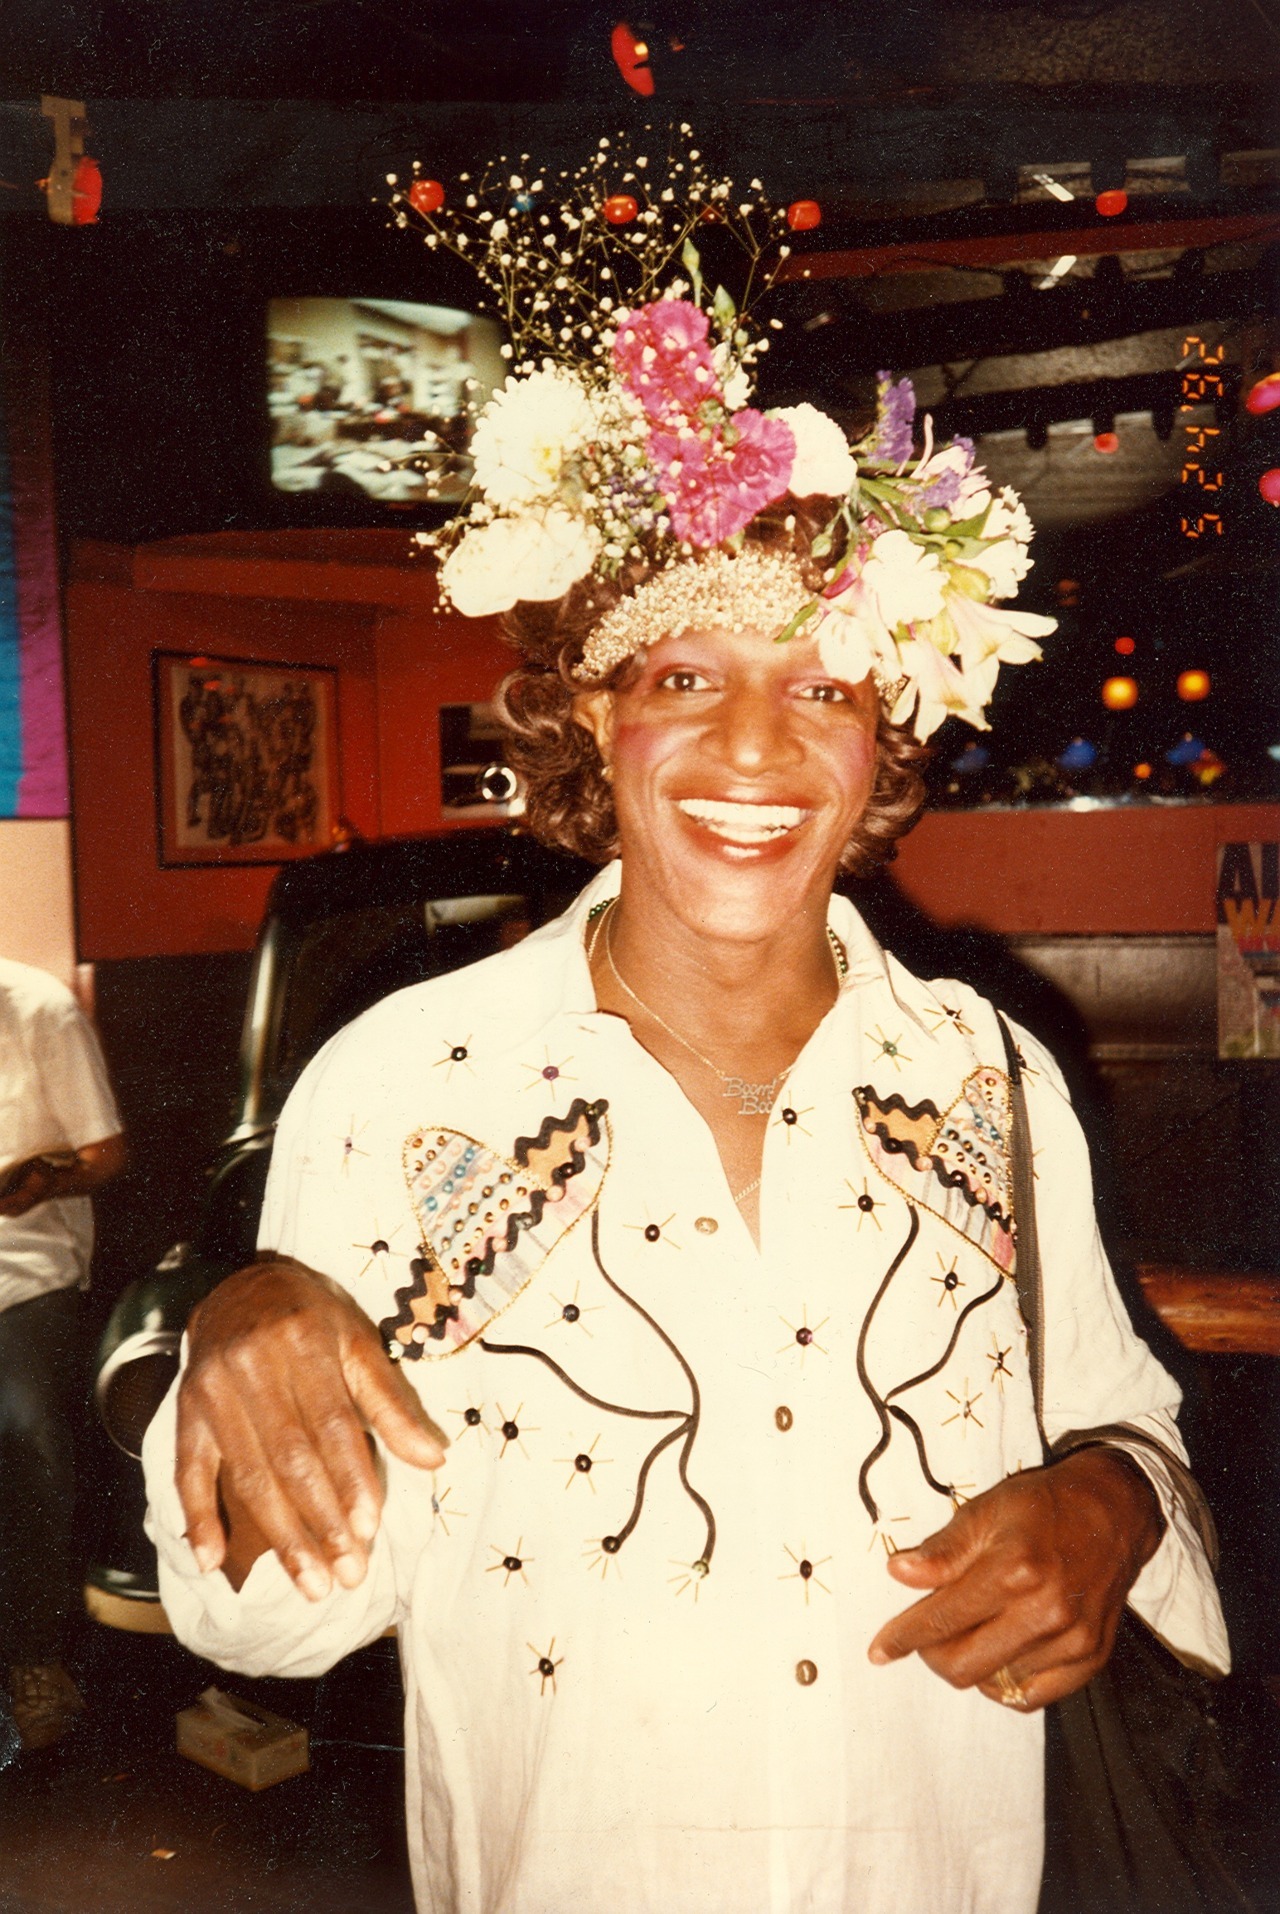 beyond-the-label:#Blackout Trans Pioneer: Marsha P. JohnsonAn influential transgender